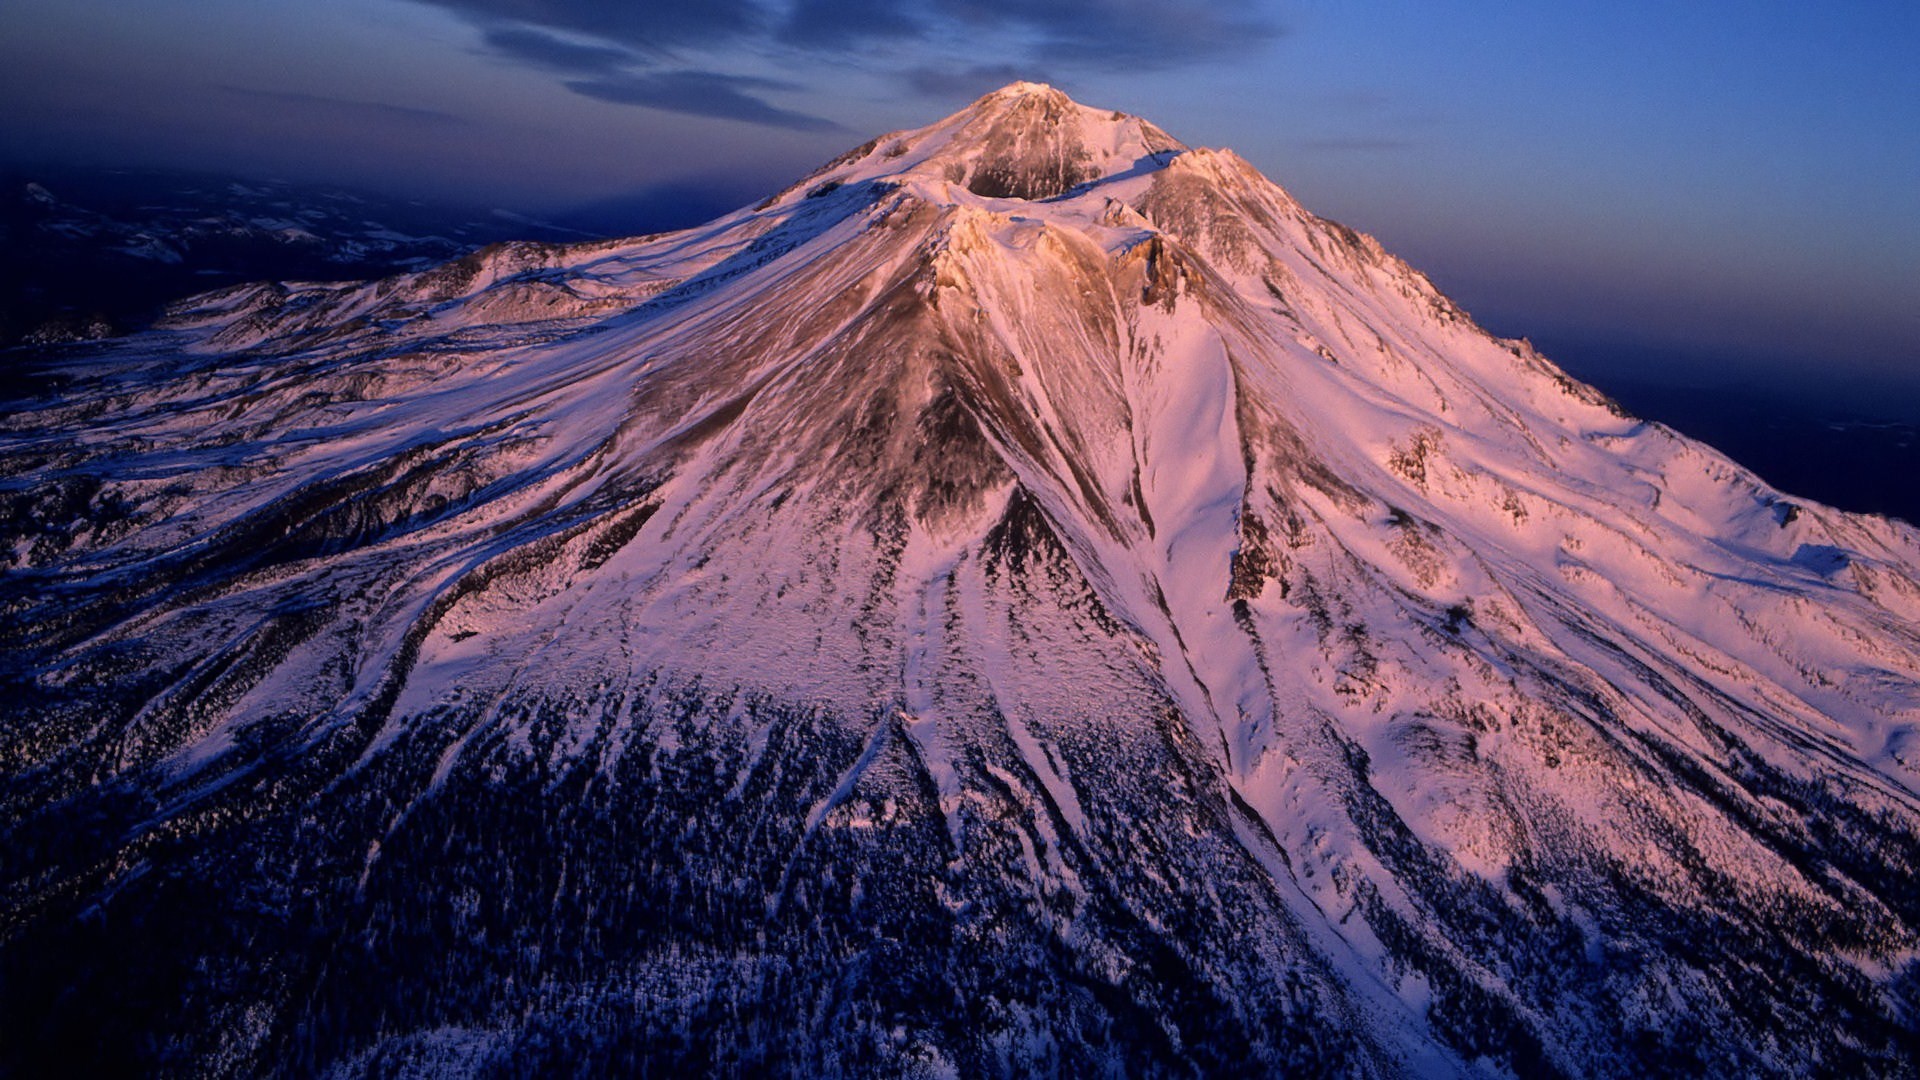 General 1920x1080 volcano mountains nature snow landscape Mount Shasta USA California snowy peak